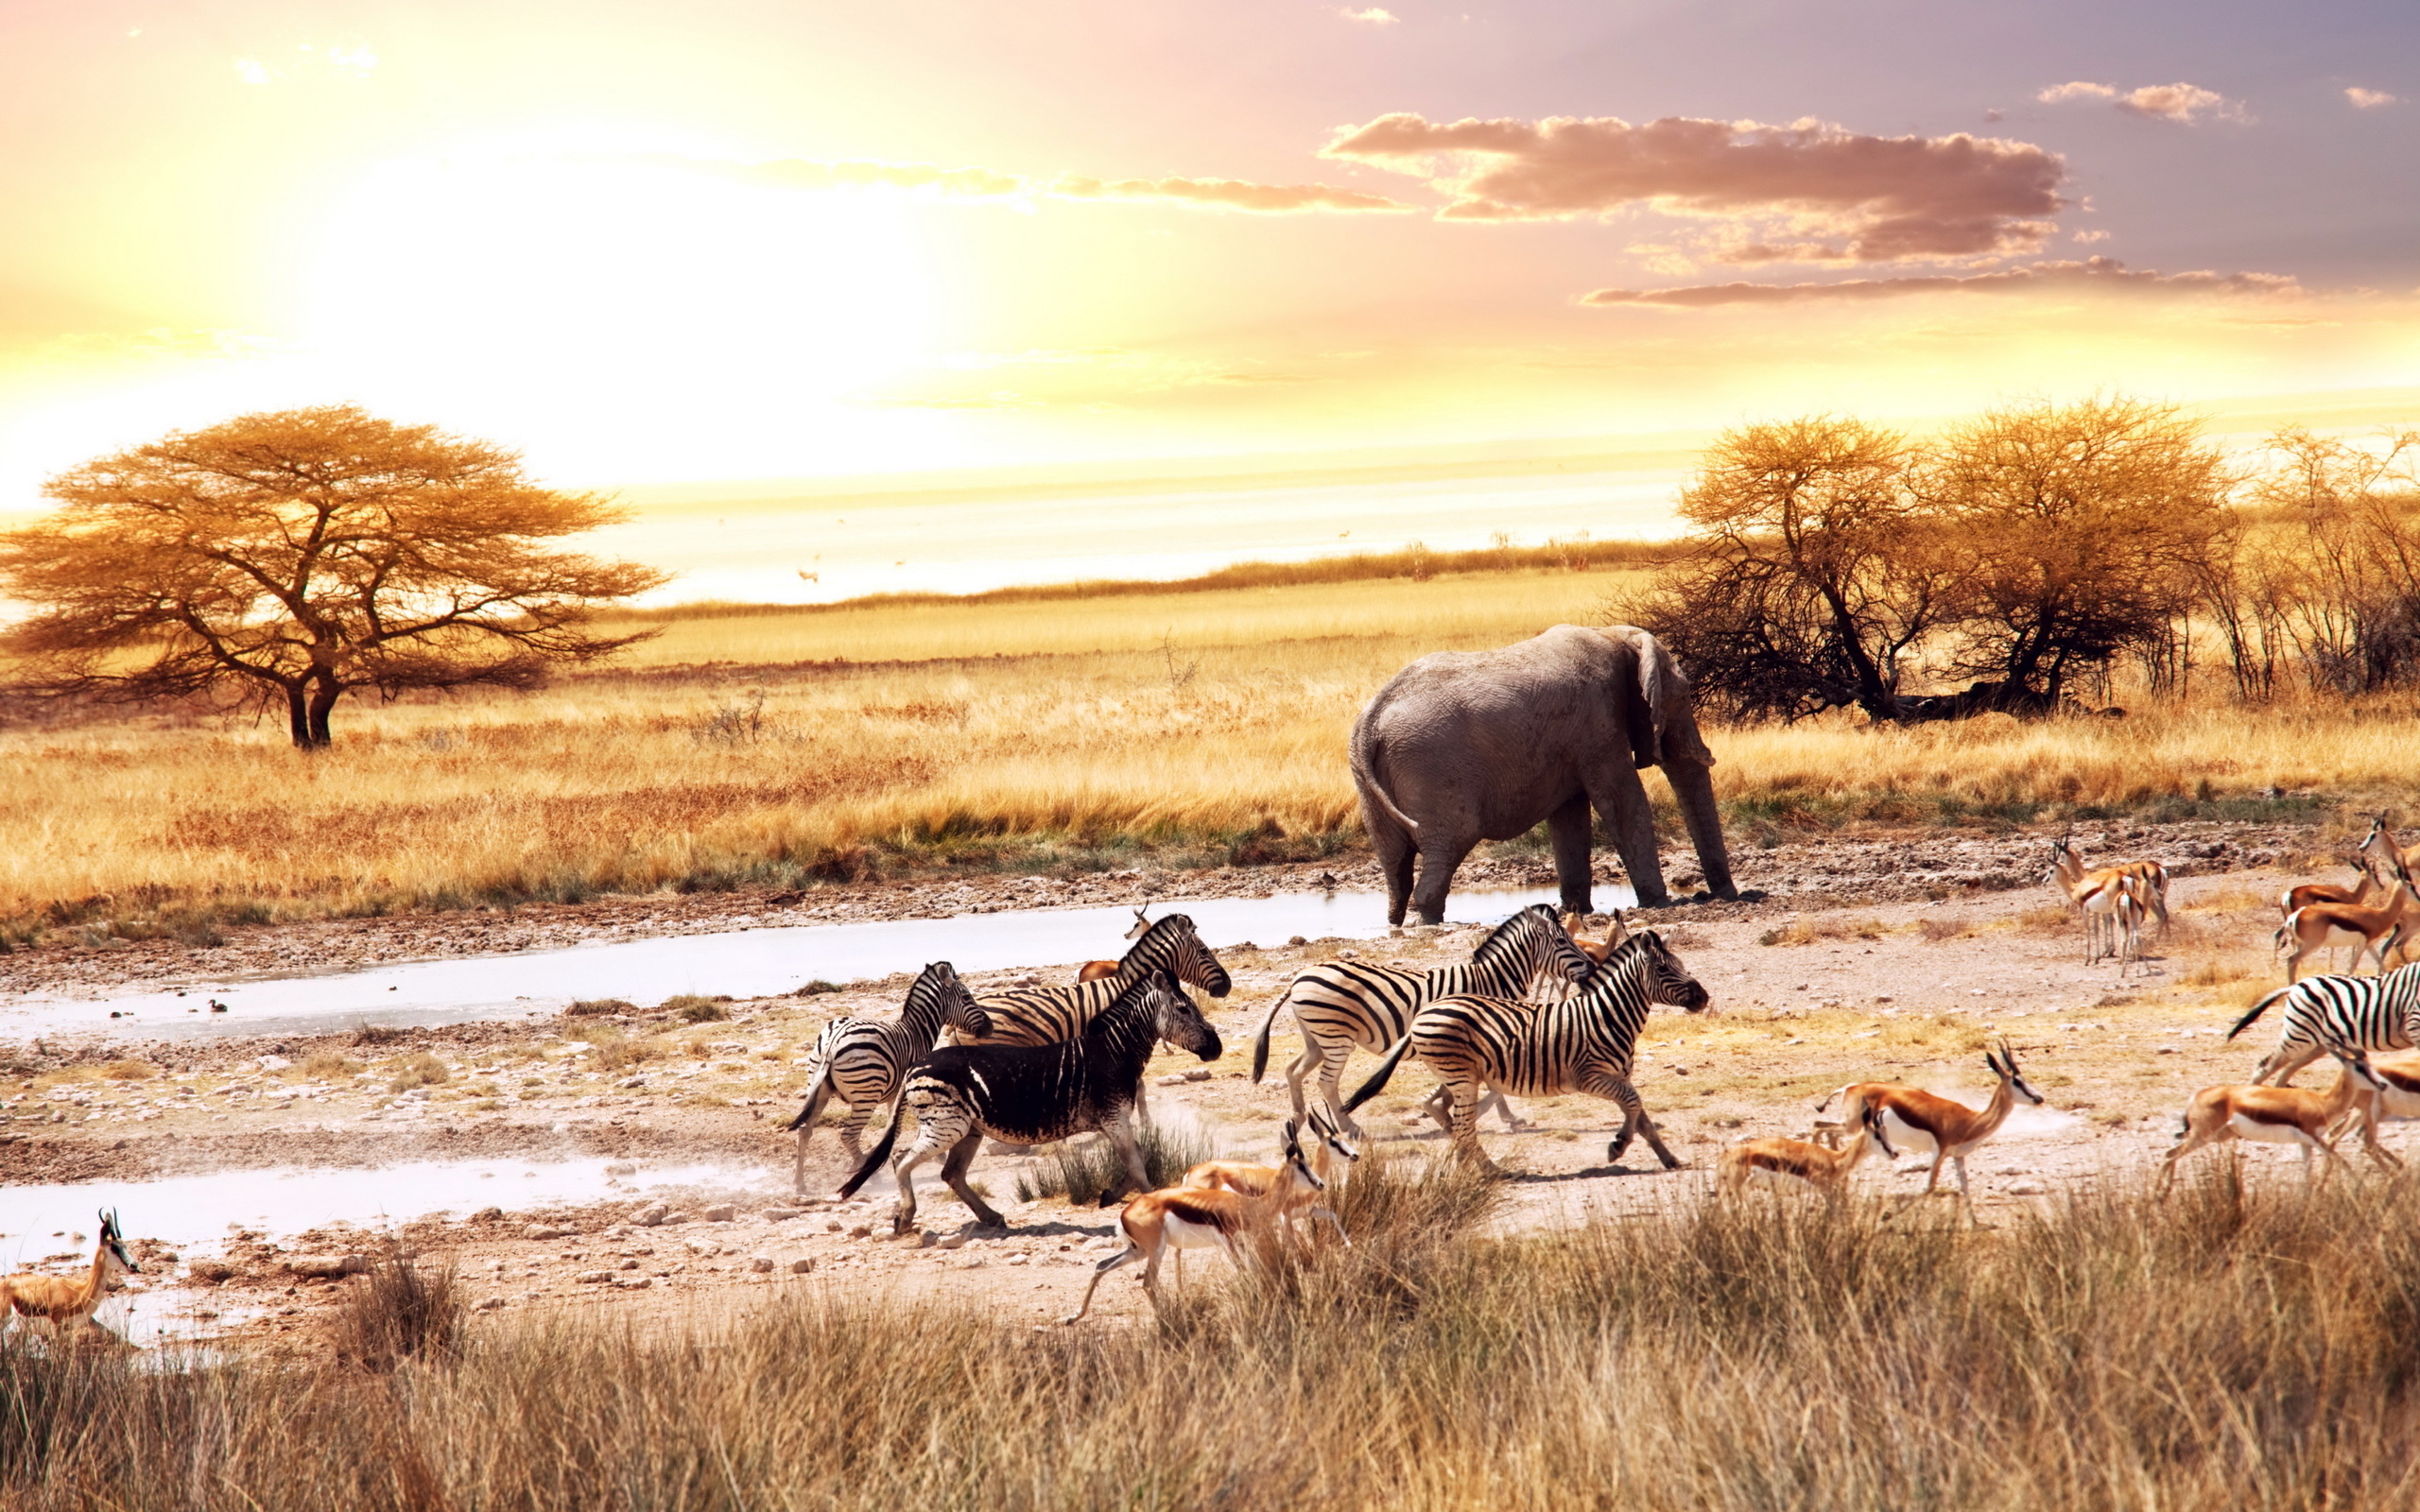 Мир животных очень разнообразен. Моюнкумская Саванна. Африка пустыня Саванна джунгли. "Африканская Саванна" - диорама. Намибия Саванна.